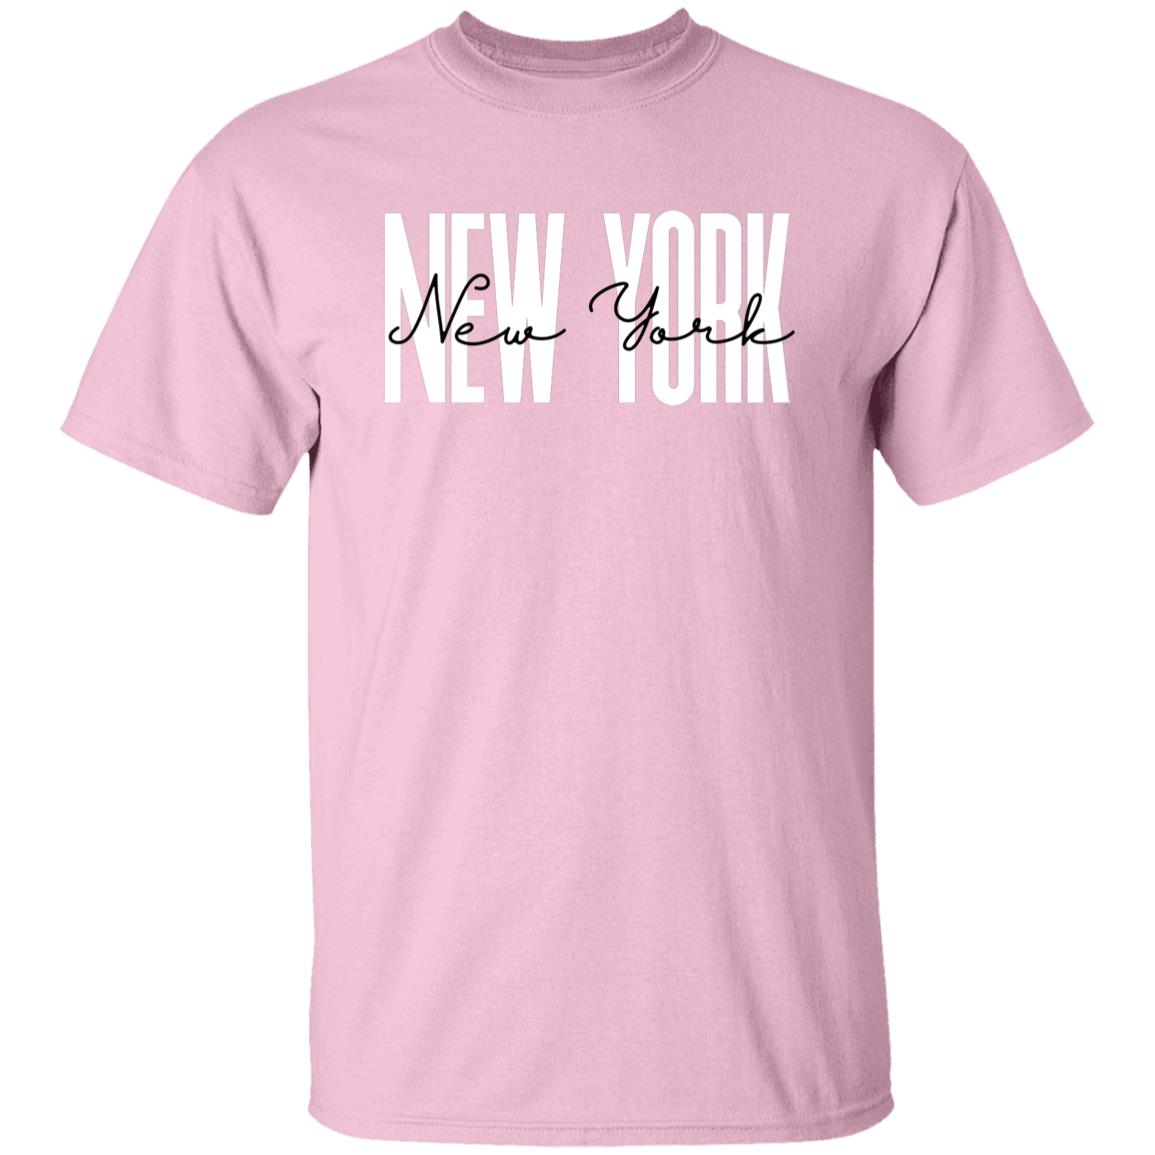 New York T-Shirt gift New York city America Unisex Tee Sand Pink Blue-Family-Gift-Planet